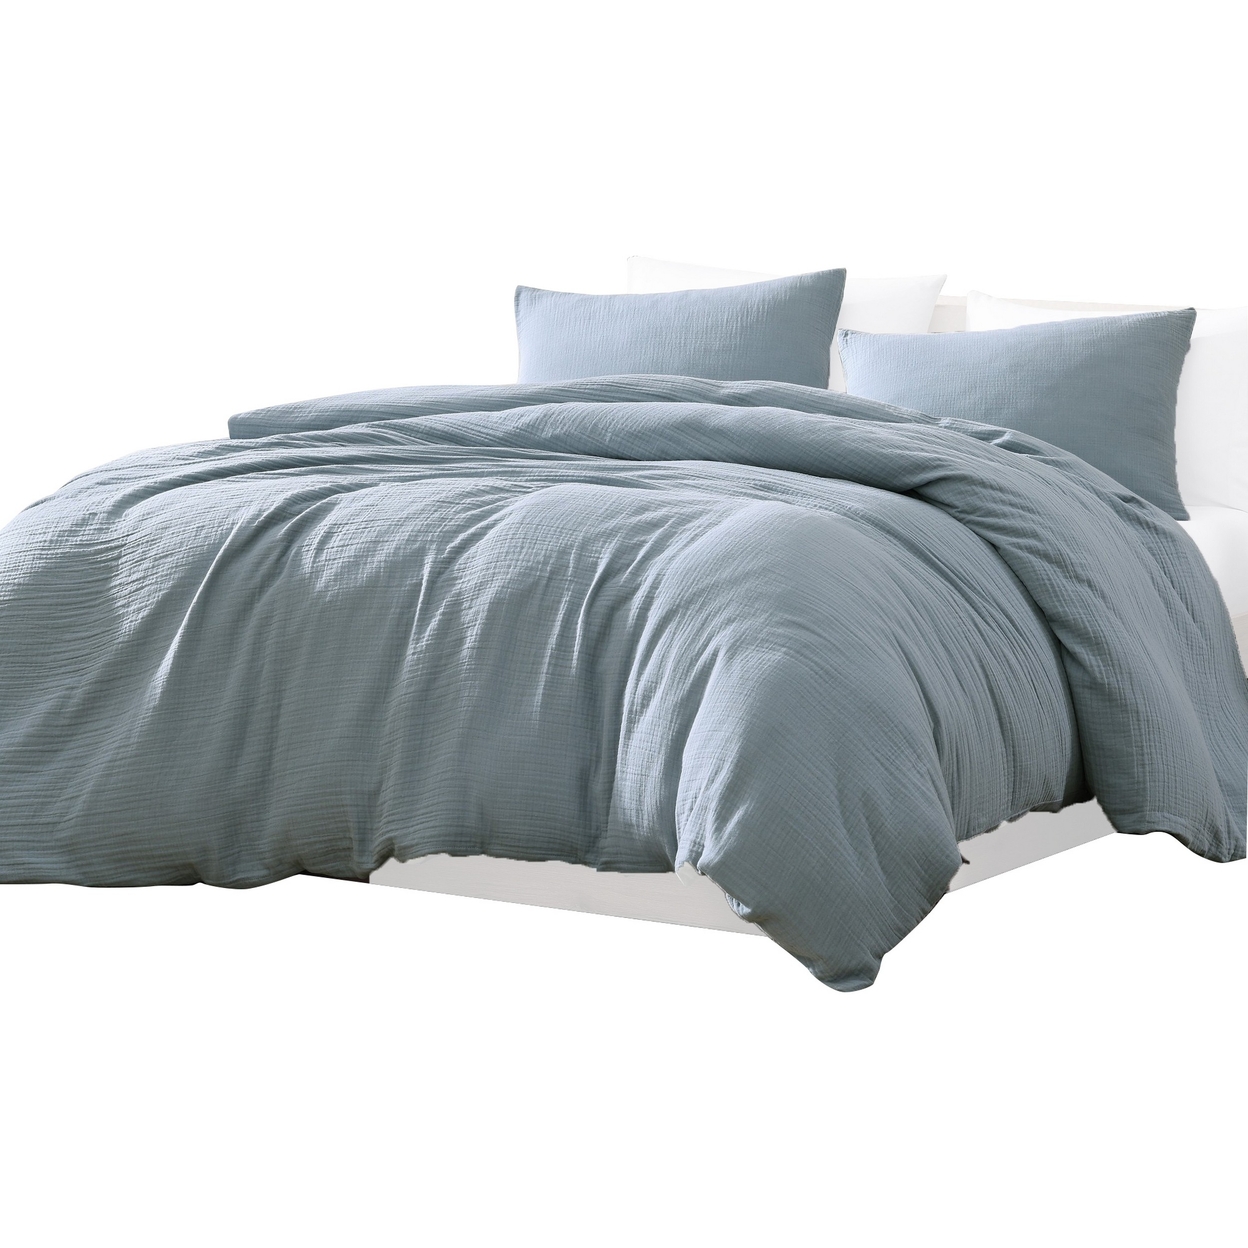 Uvi 3 Piece Queen Comforter Set, Cotton, Natural Crinkled Texture, Blue - Saltoro Sherpi